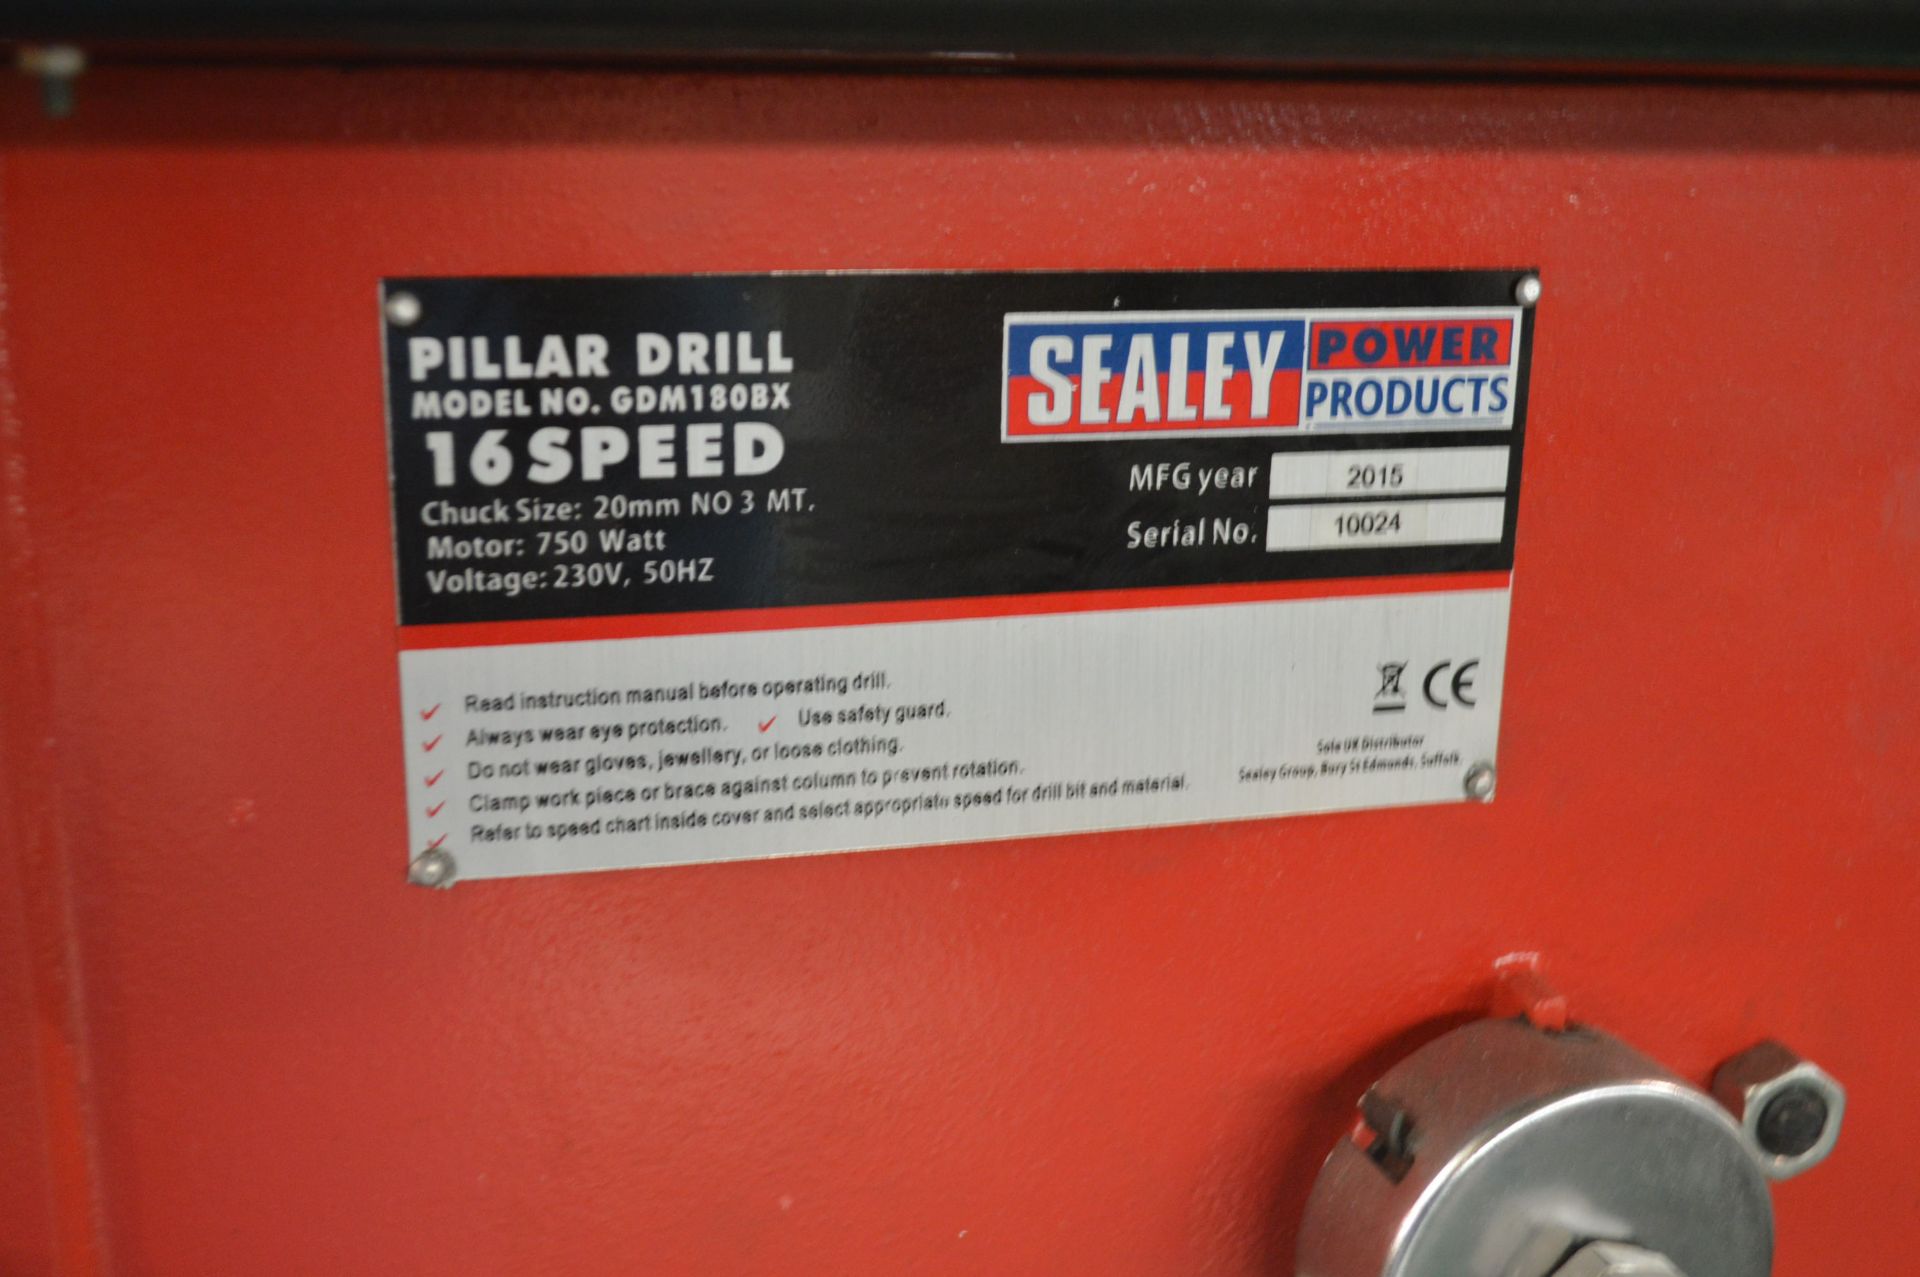 Sealey GDM180BX 16 Speed Pillar Drill, serial no. - Image 3 of 3